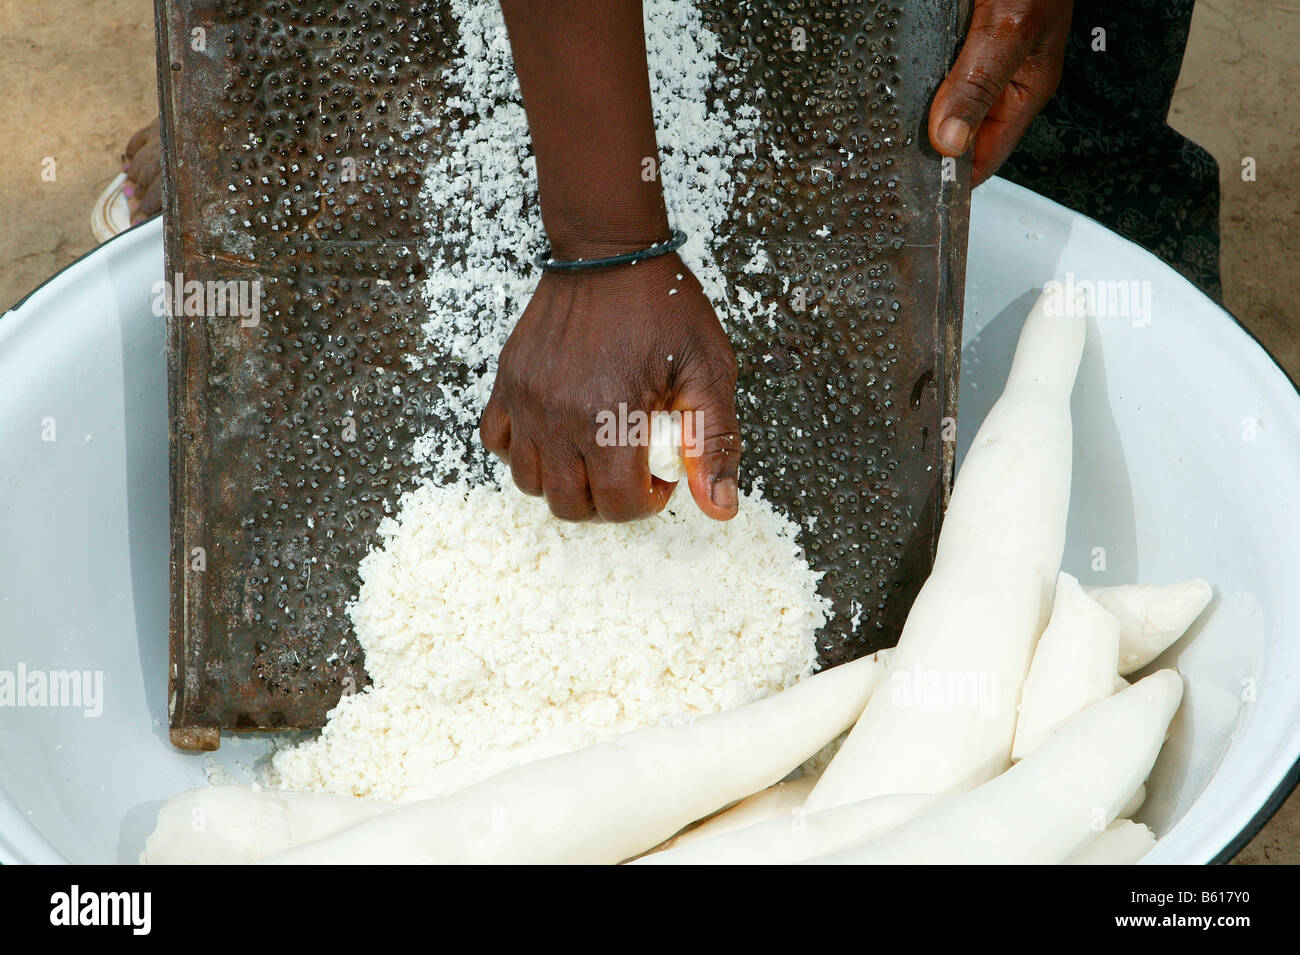 Woman grating maniok or cassava into flakes, Bamenda, Cameroon, Africa Stock Photo